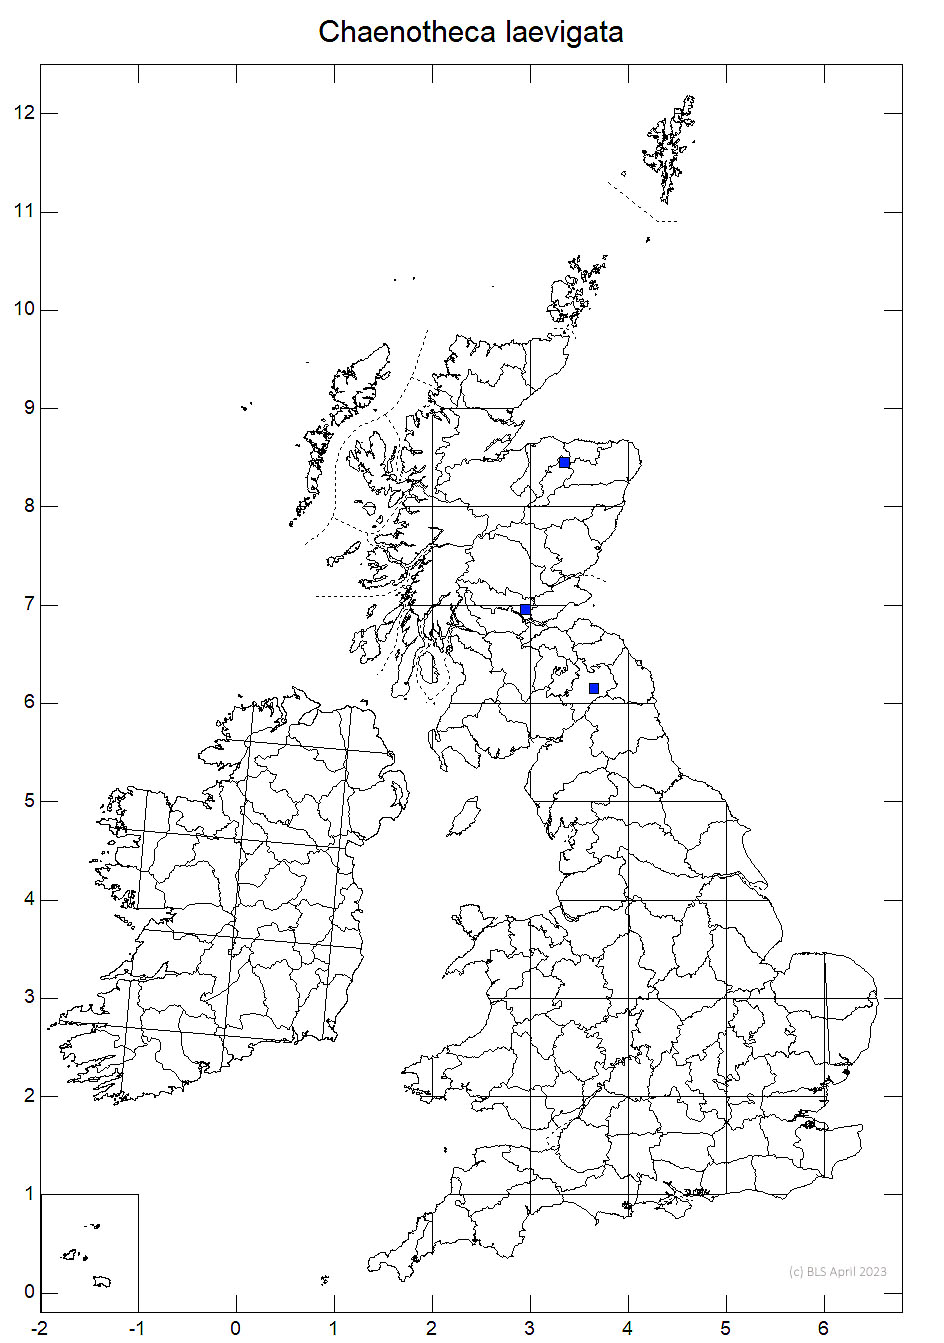 Chaenotheca laevigata 10km sq distribution map